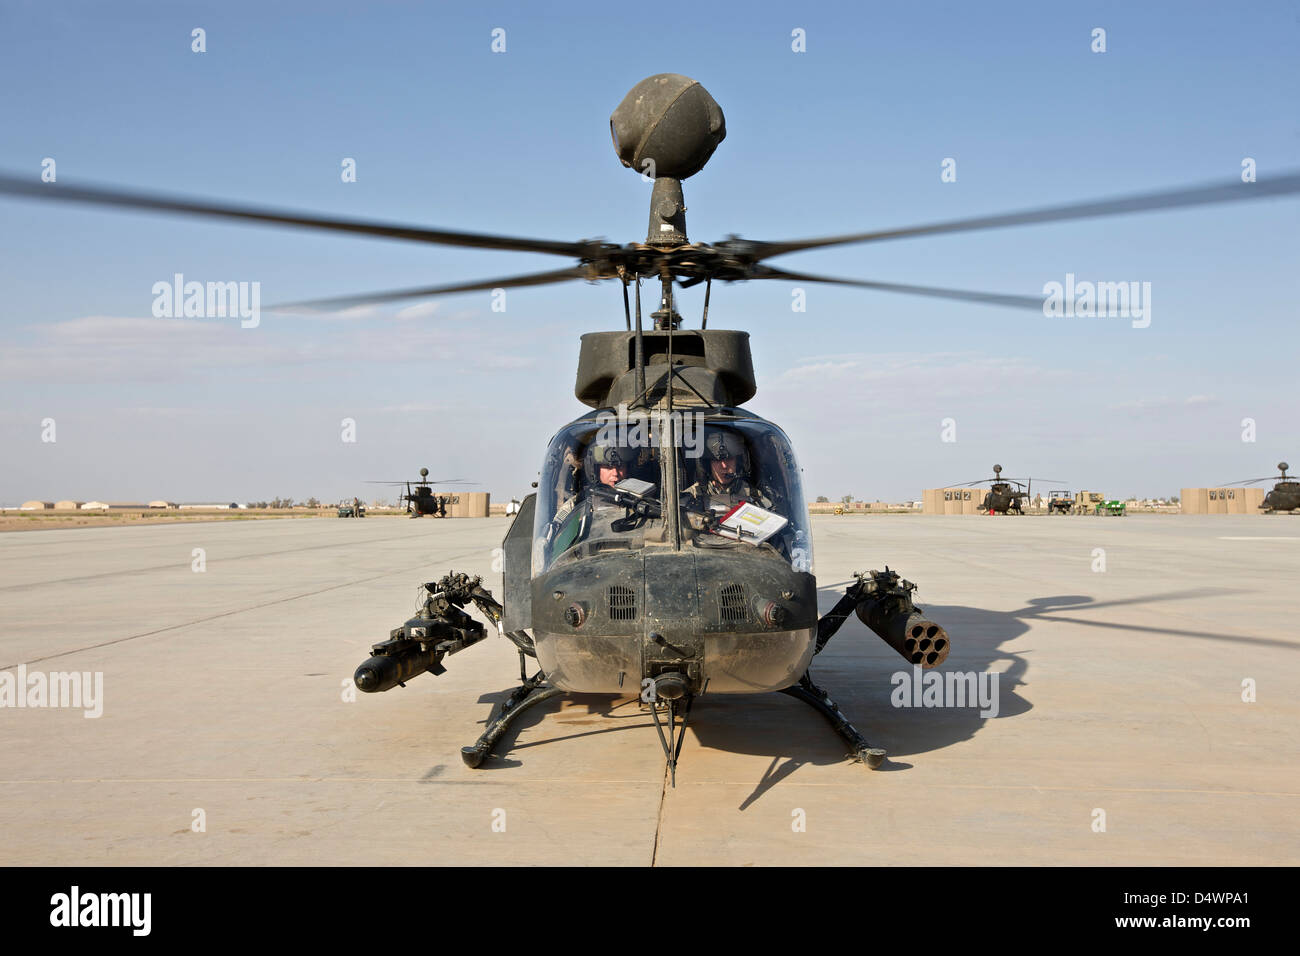 Un helicóptero OH-58D Kiowa se prepara para despegar de la Mazorca Speicher, Tikrit, Iraq, durante la Operación Libertad Iraquí. Foto de stock